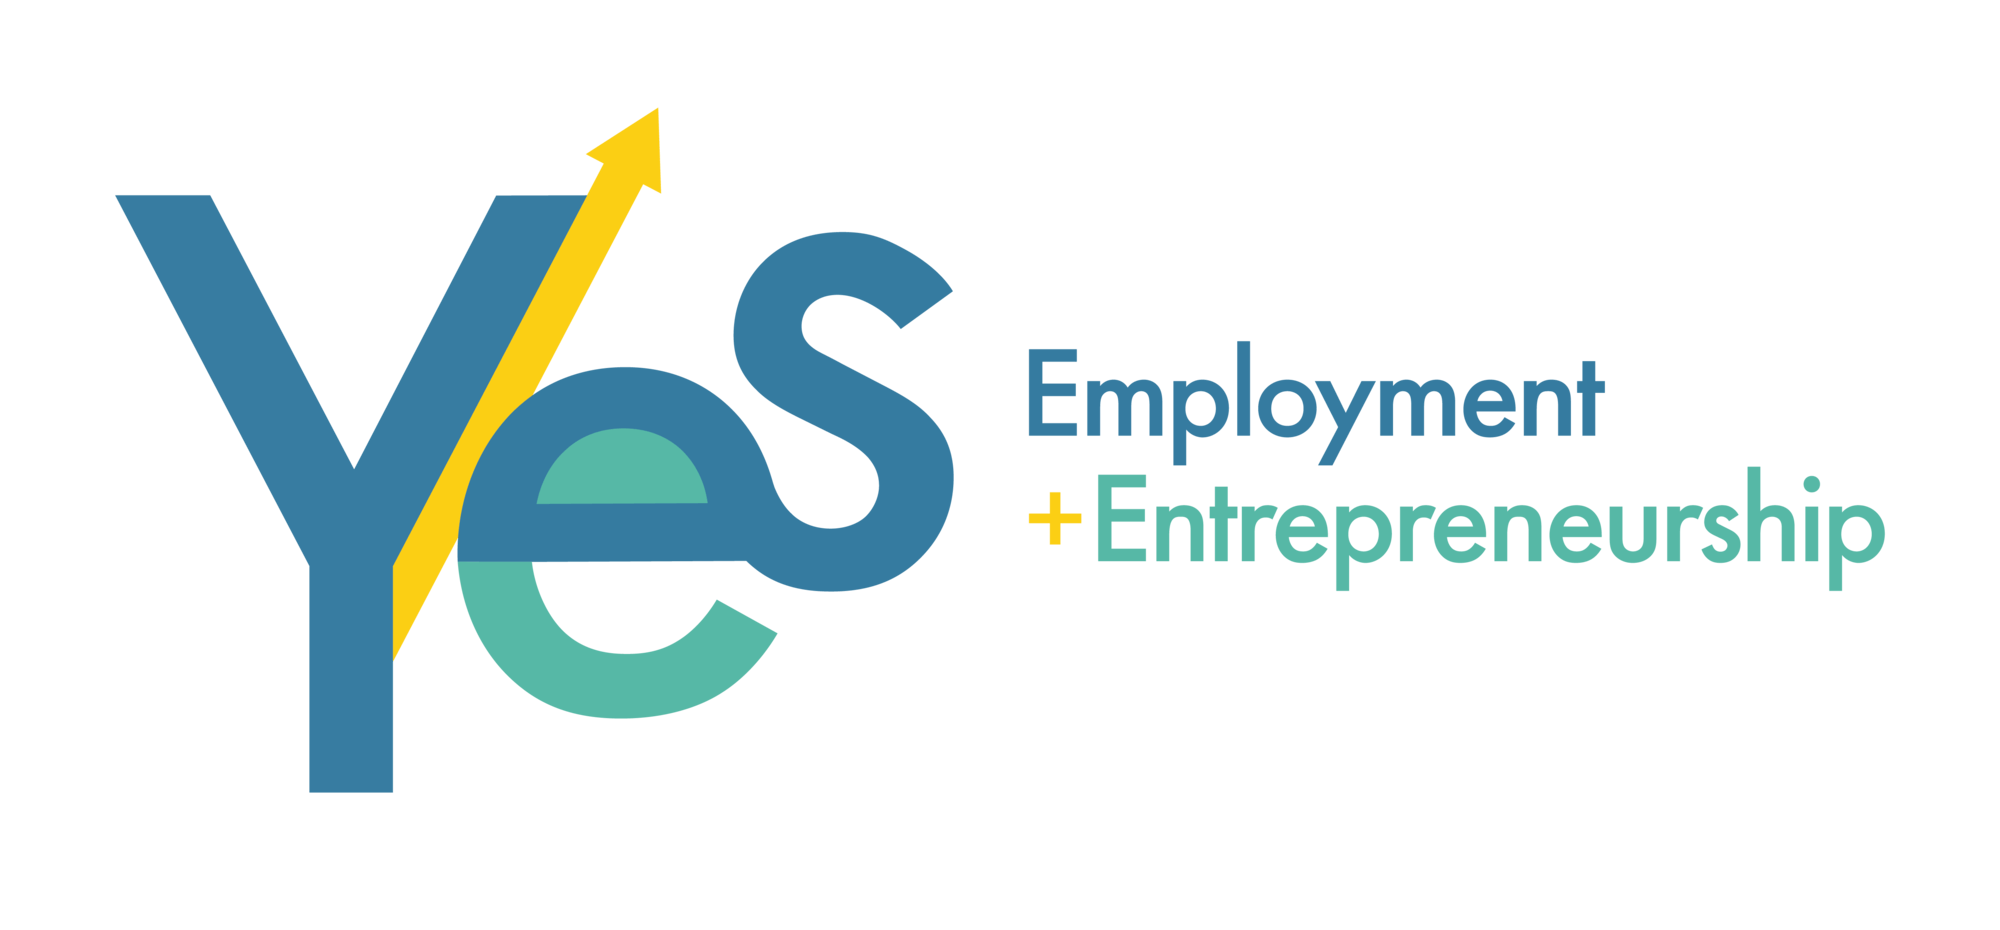 YES Employment + Entrepreneurship